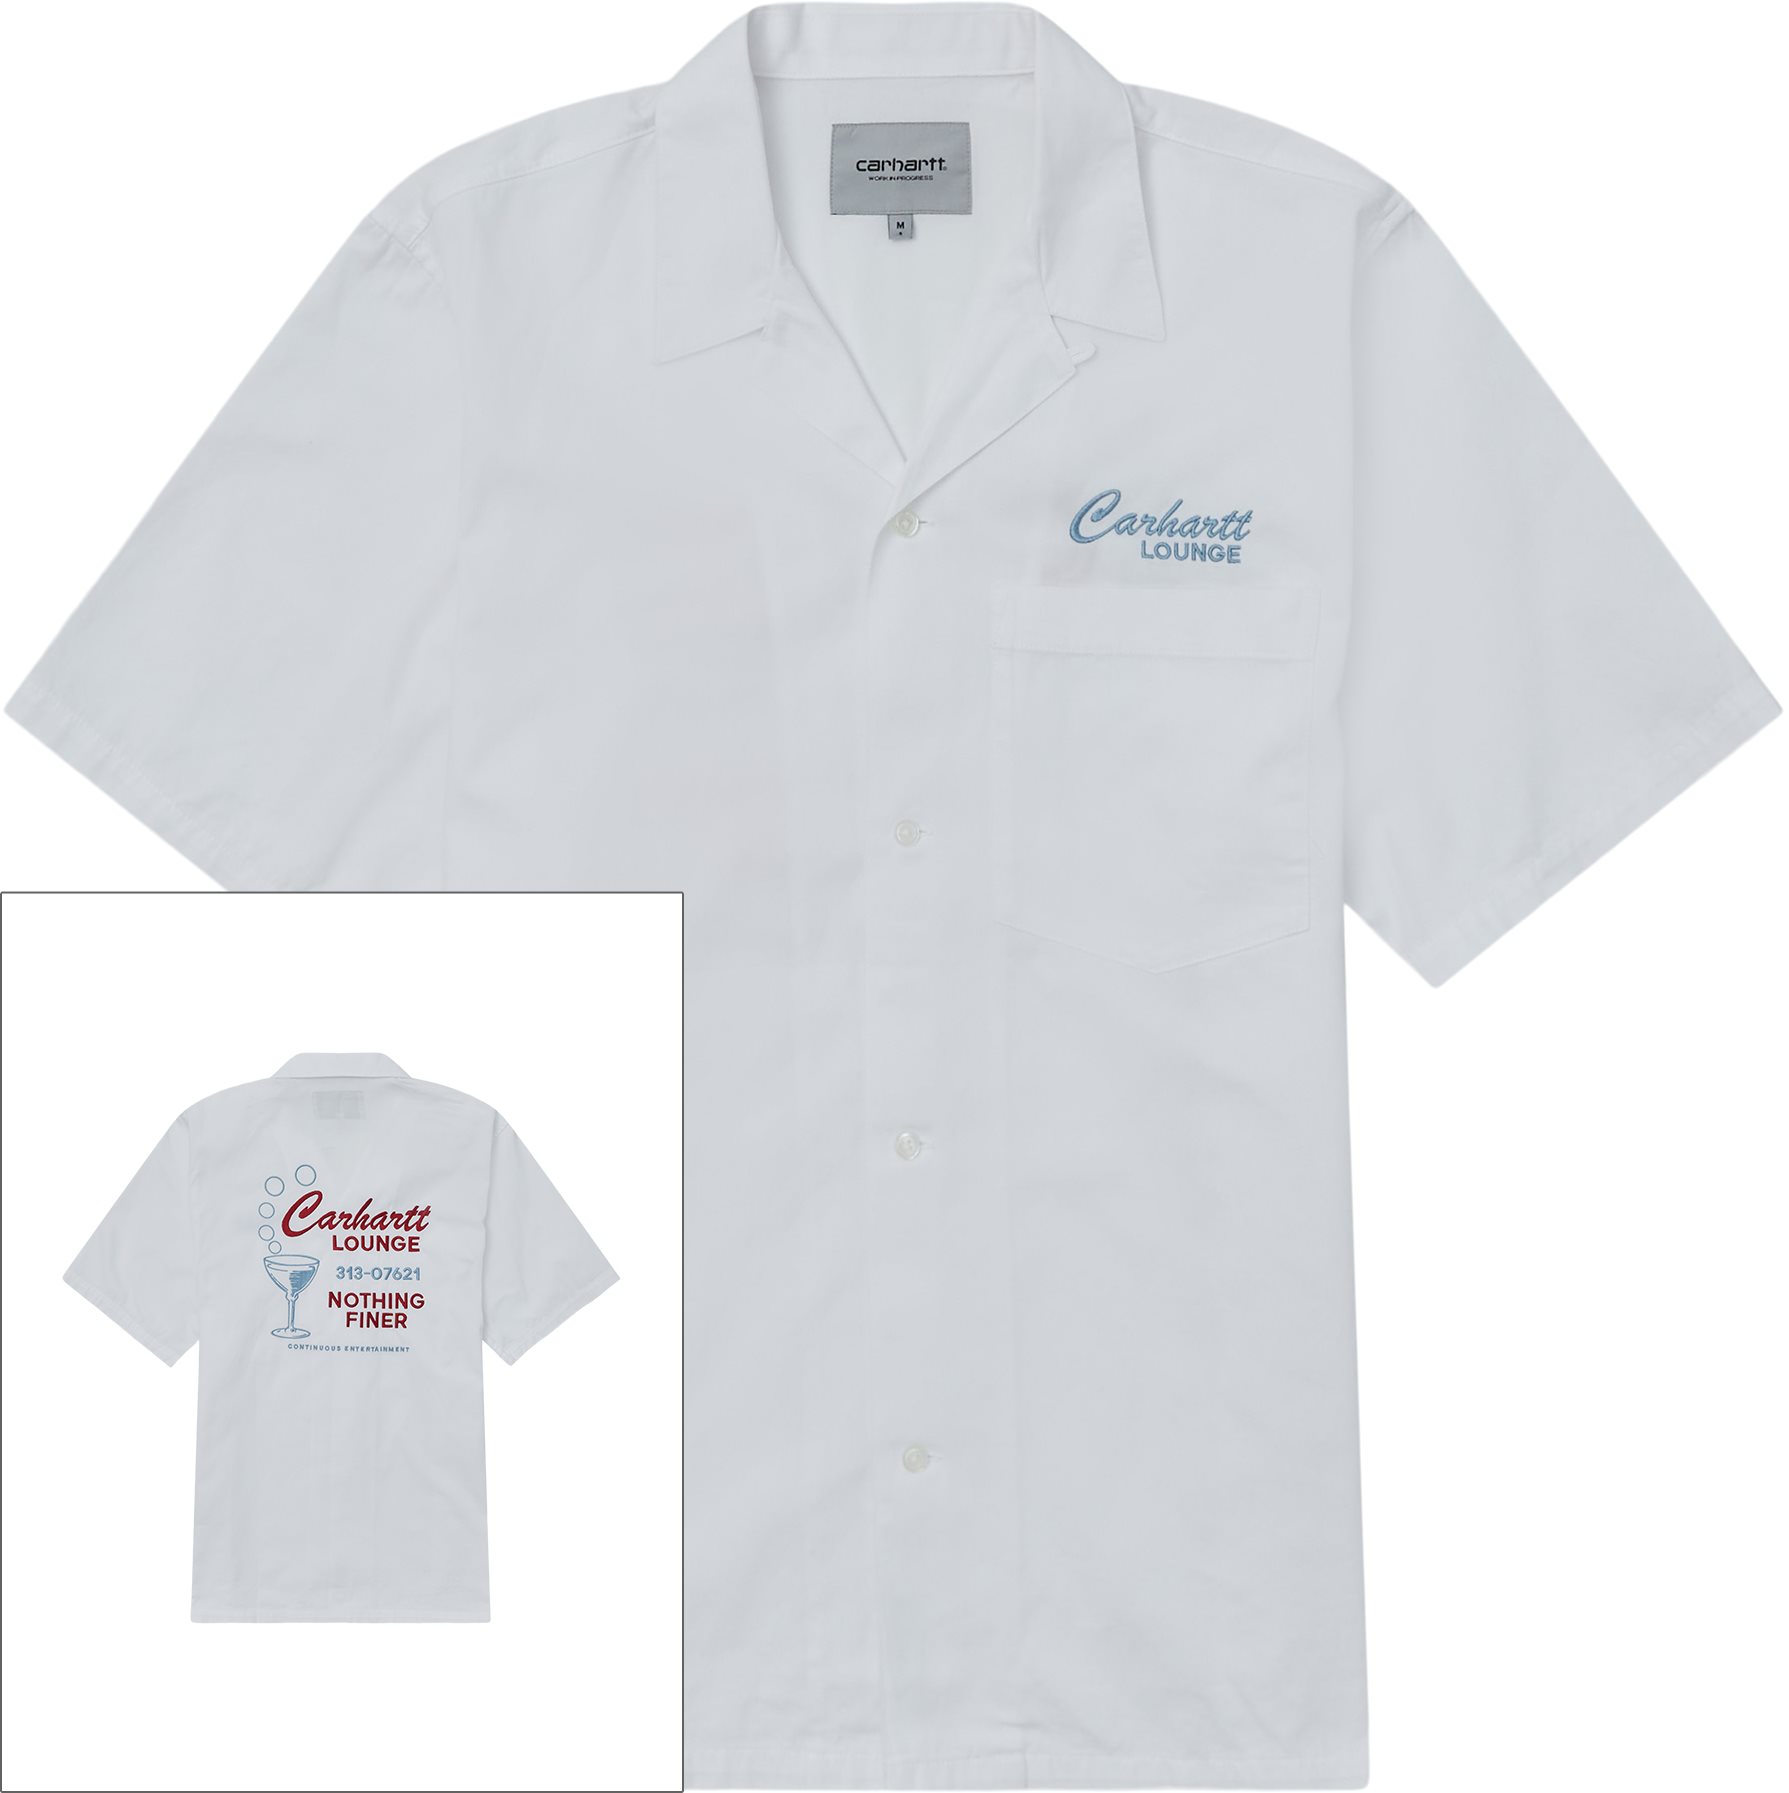 Carhartt WIP Shirts S/S CARHARTT LOUNGE I030046 White